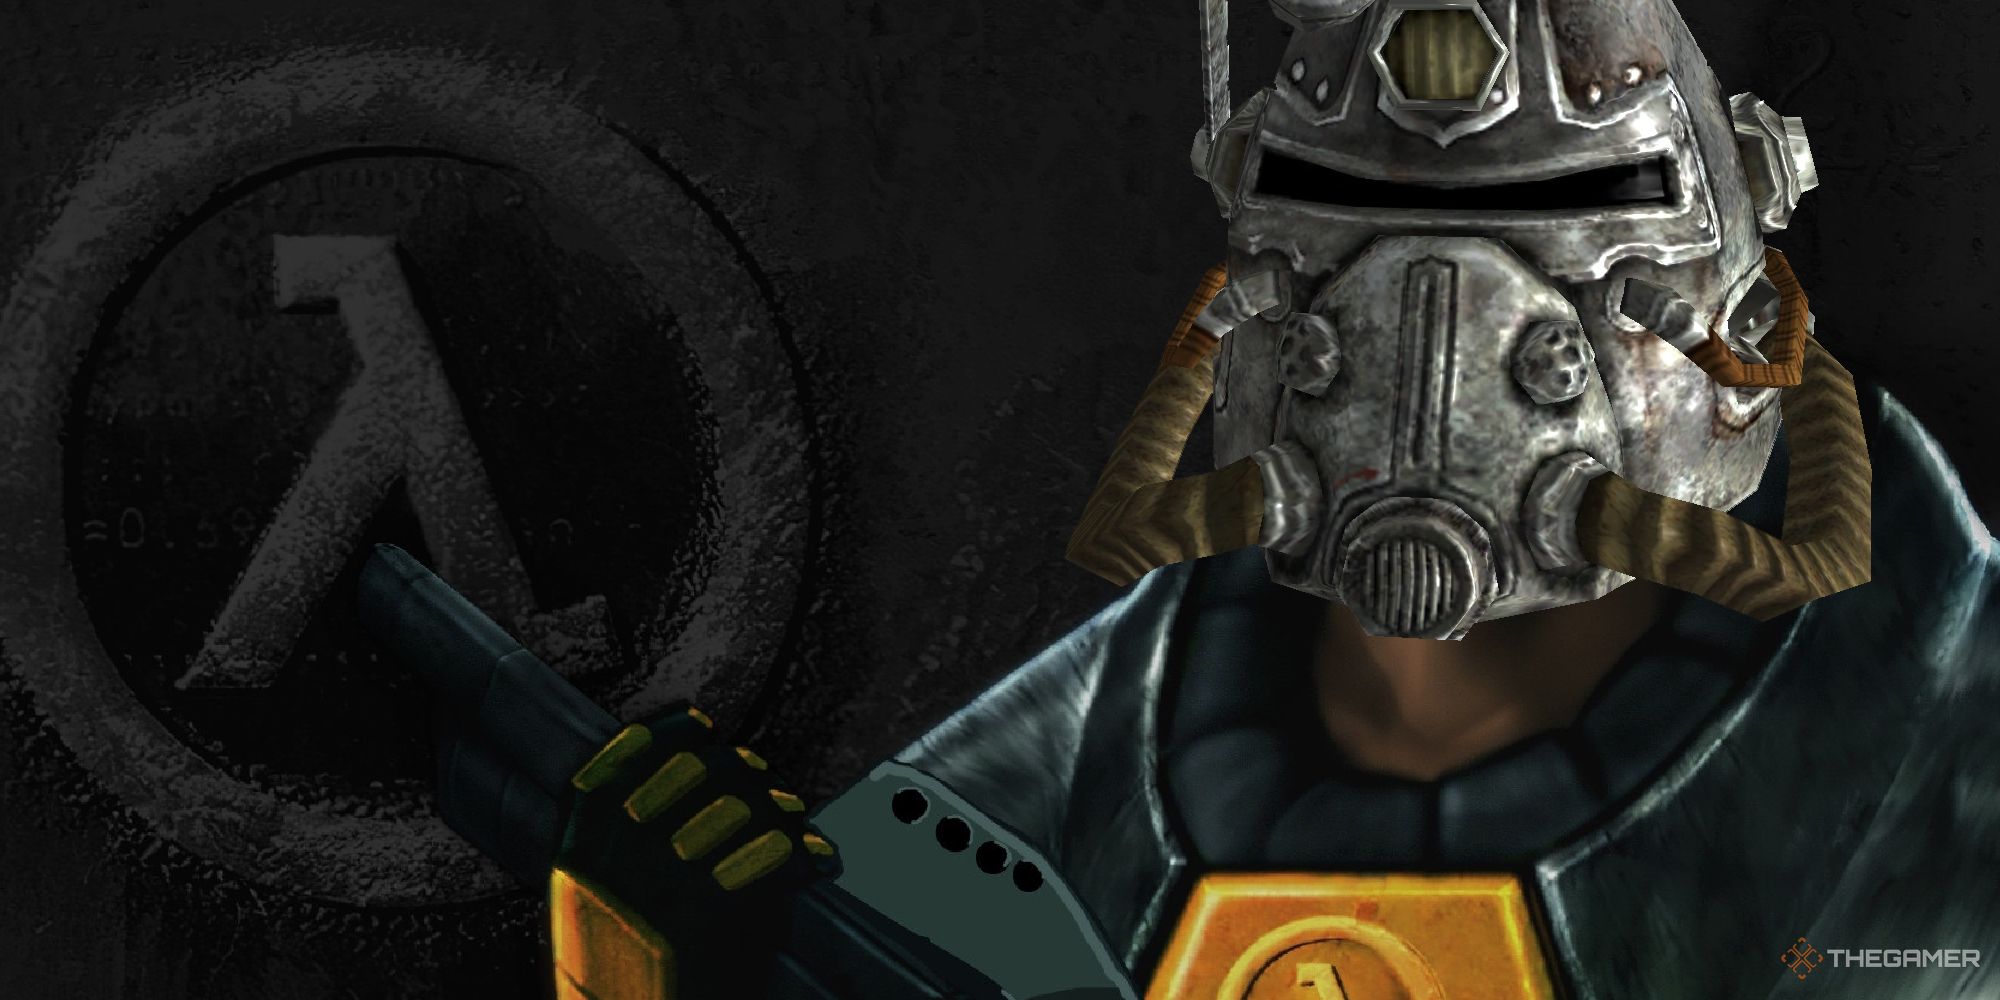 Original Half-Life cover art but Gordon Freeman is wearing a Power Armour helmet from Fallout 3